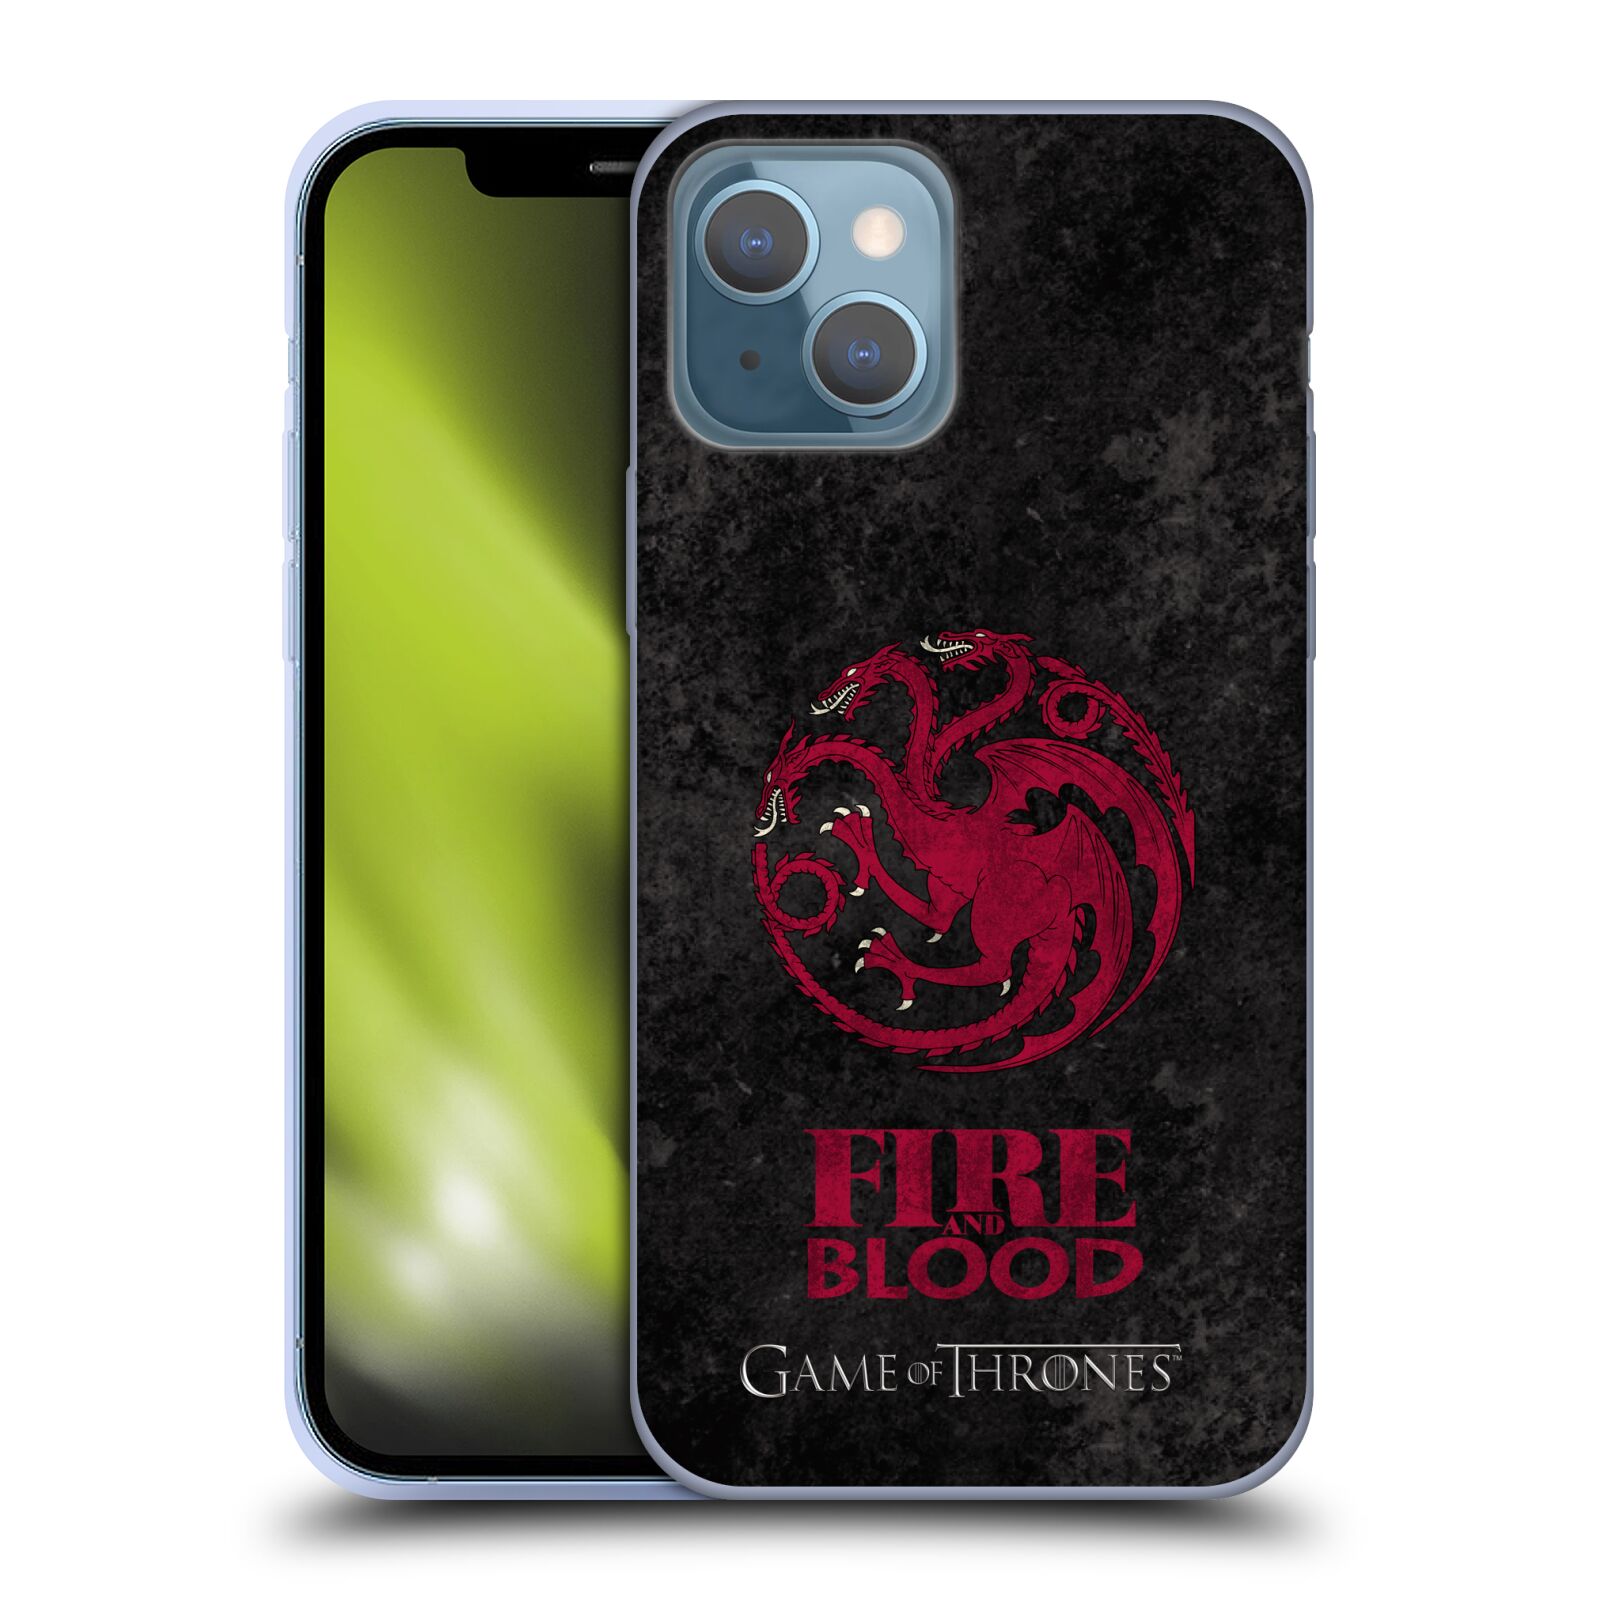 Silikonové pouzdro na mobil Apple iPhone 13 - Head Case - Hra o trůny - Sigils Targaryen - Fire and Blood (Silikonový kryt, obal, pouzdro na mobilní telefon Apple iPhone 13 s motivem Hra o trůny - Sigils Targaryen - Fire and Blood)